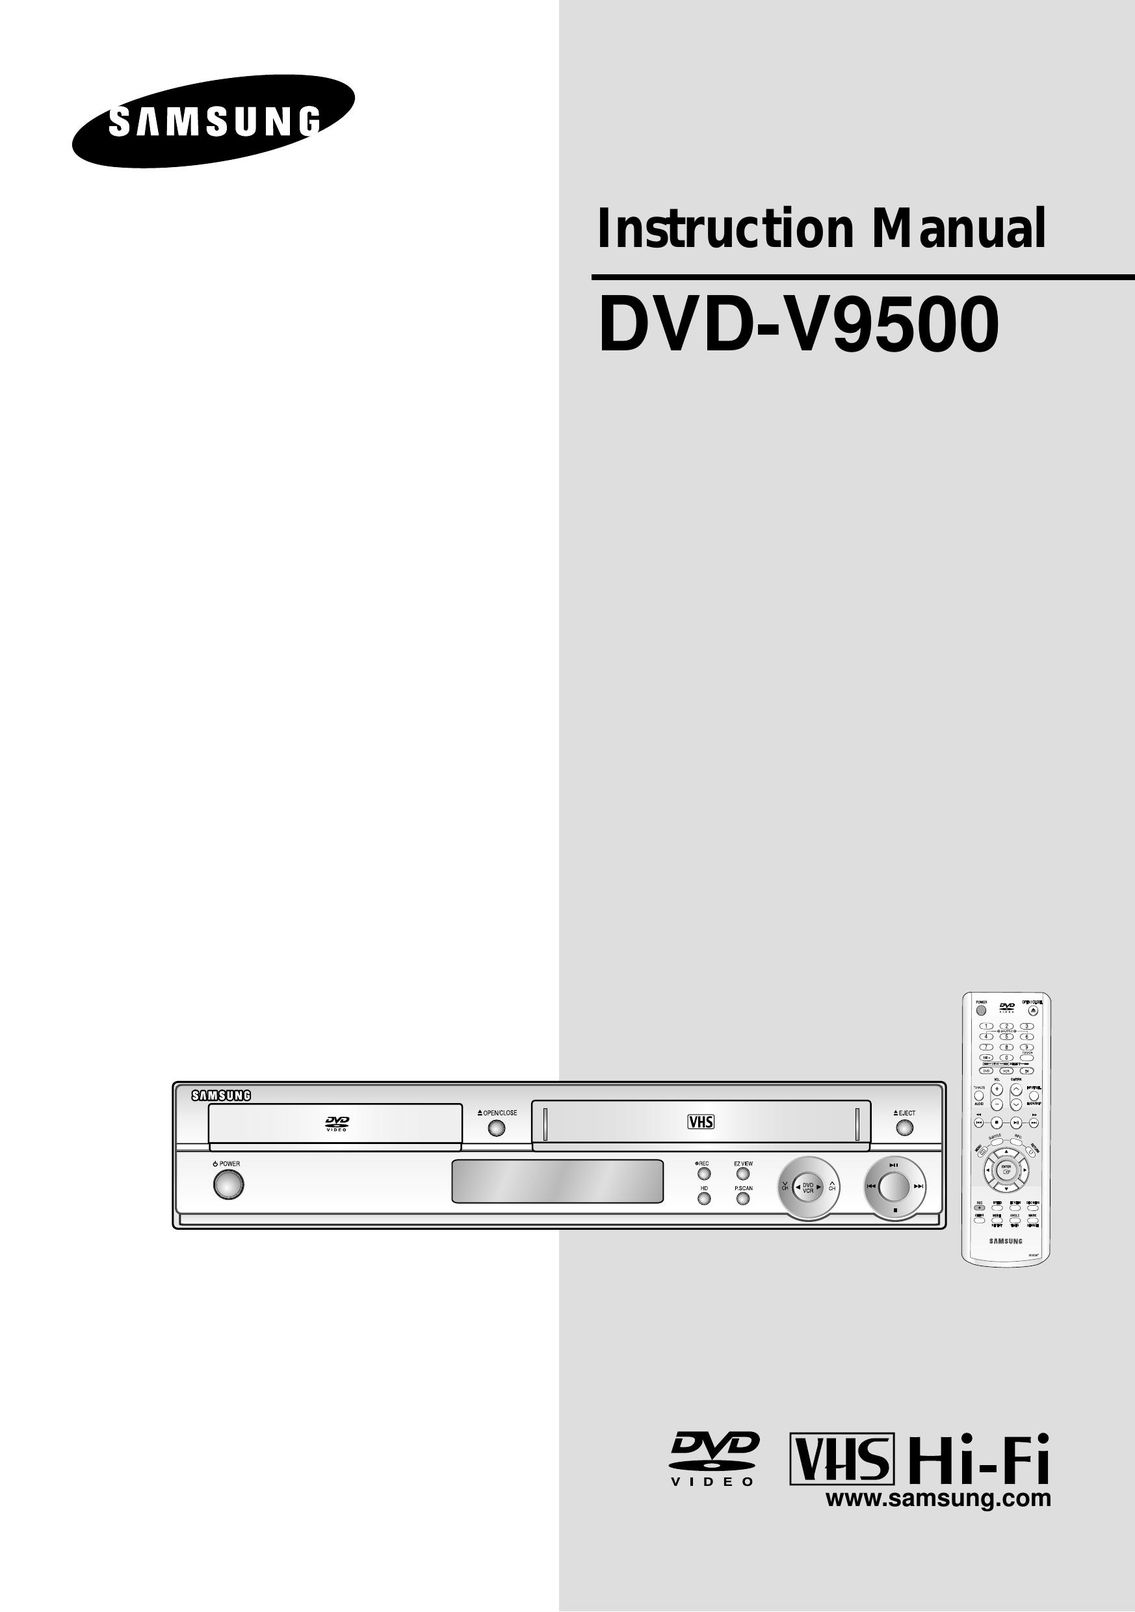 Samsung DVD-V9500 MP3 Player User Manual